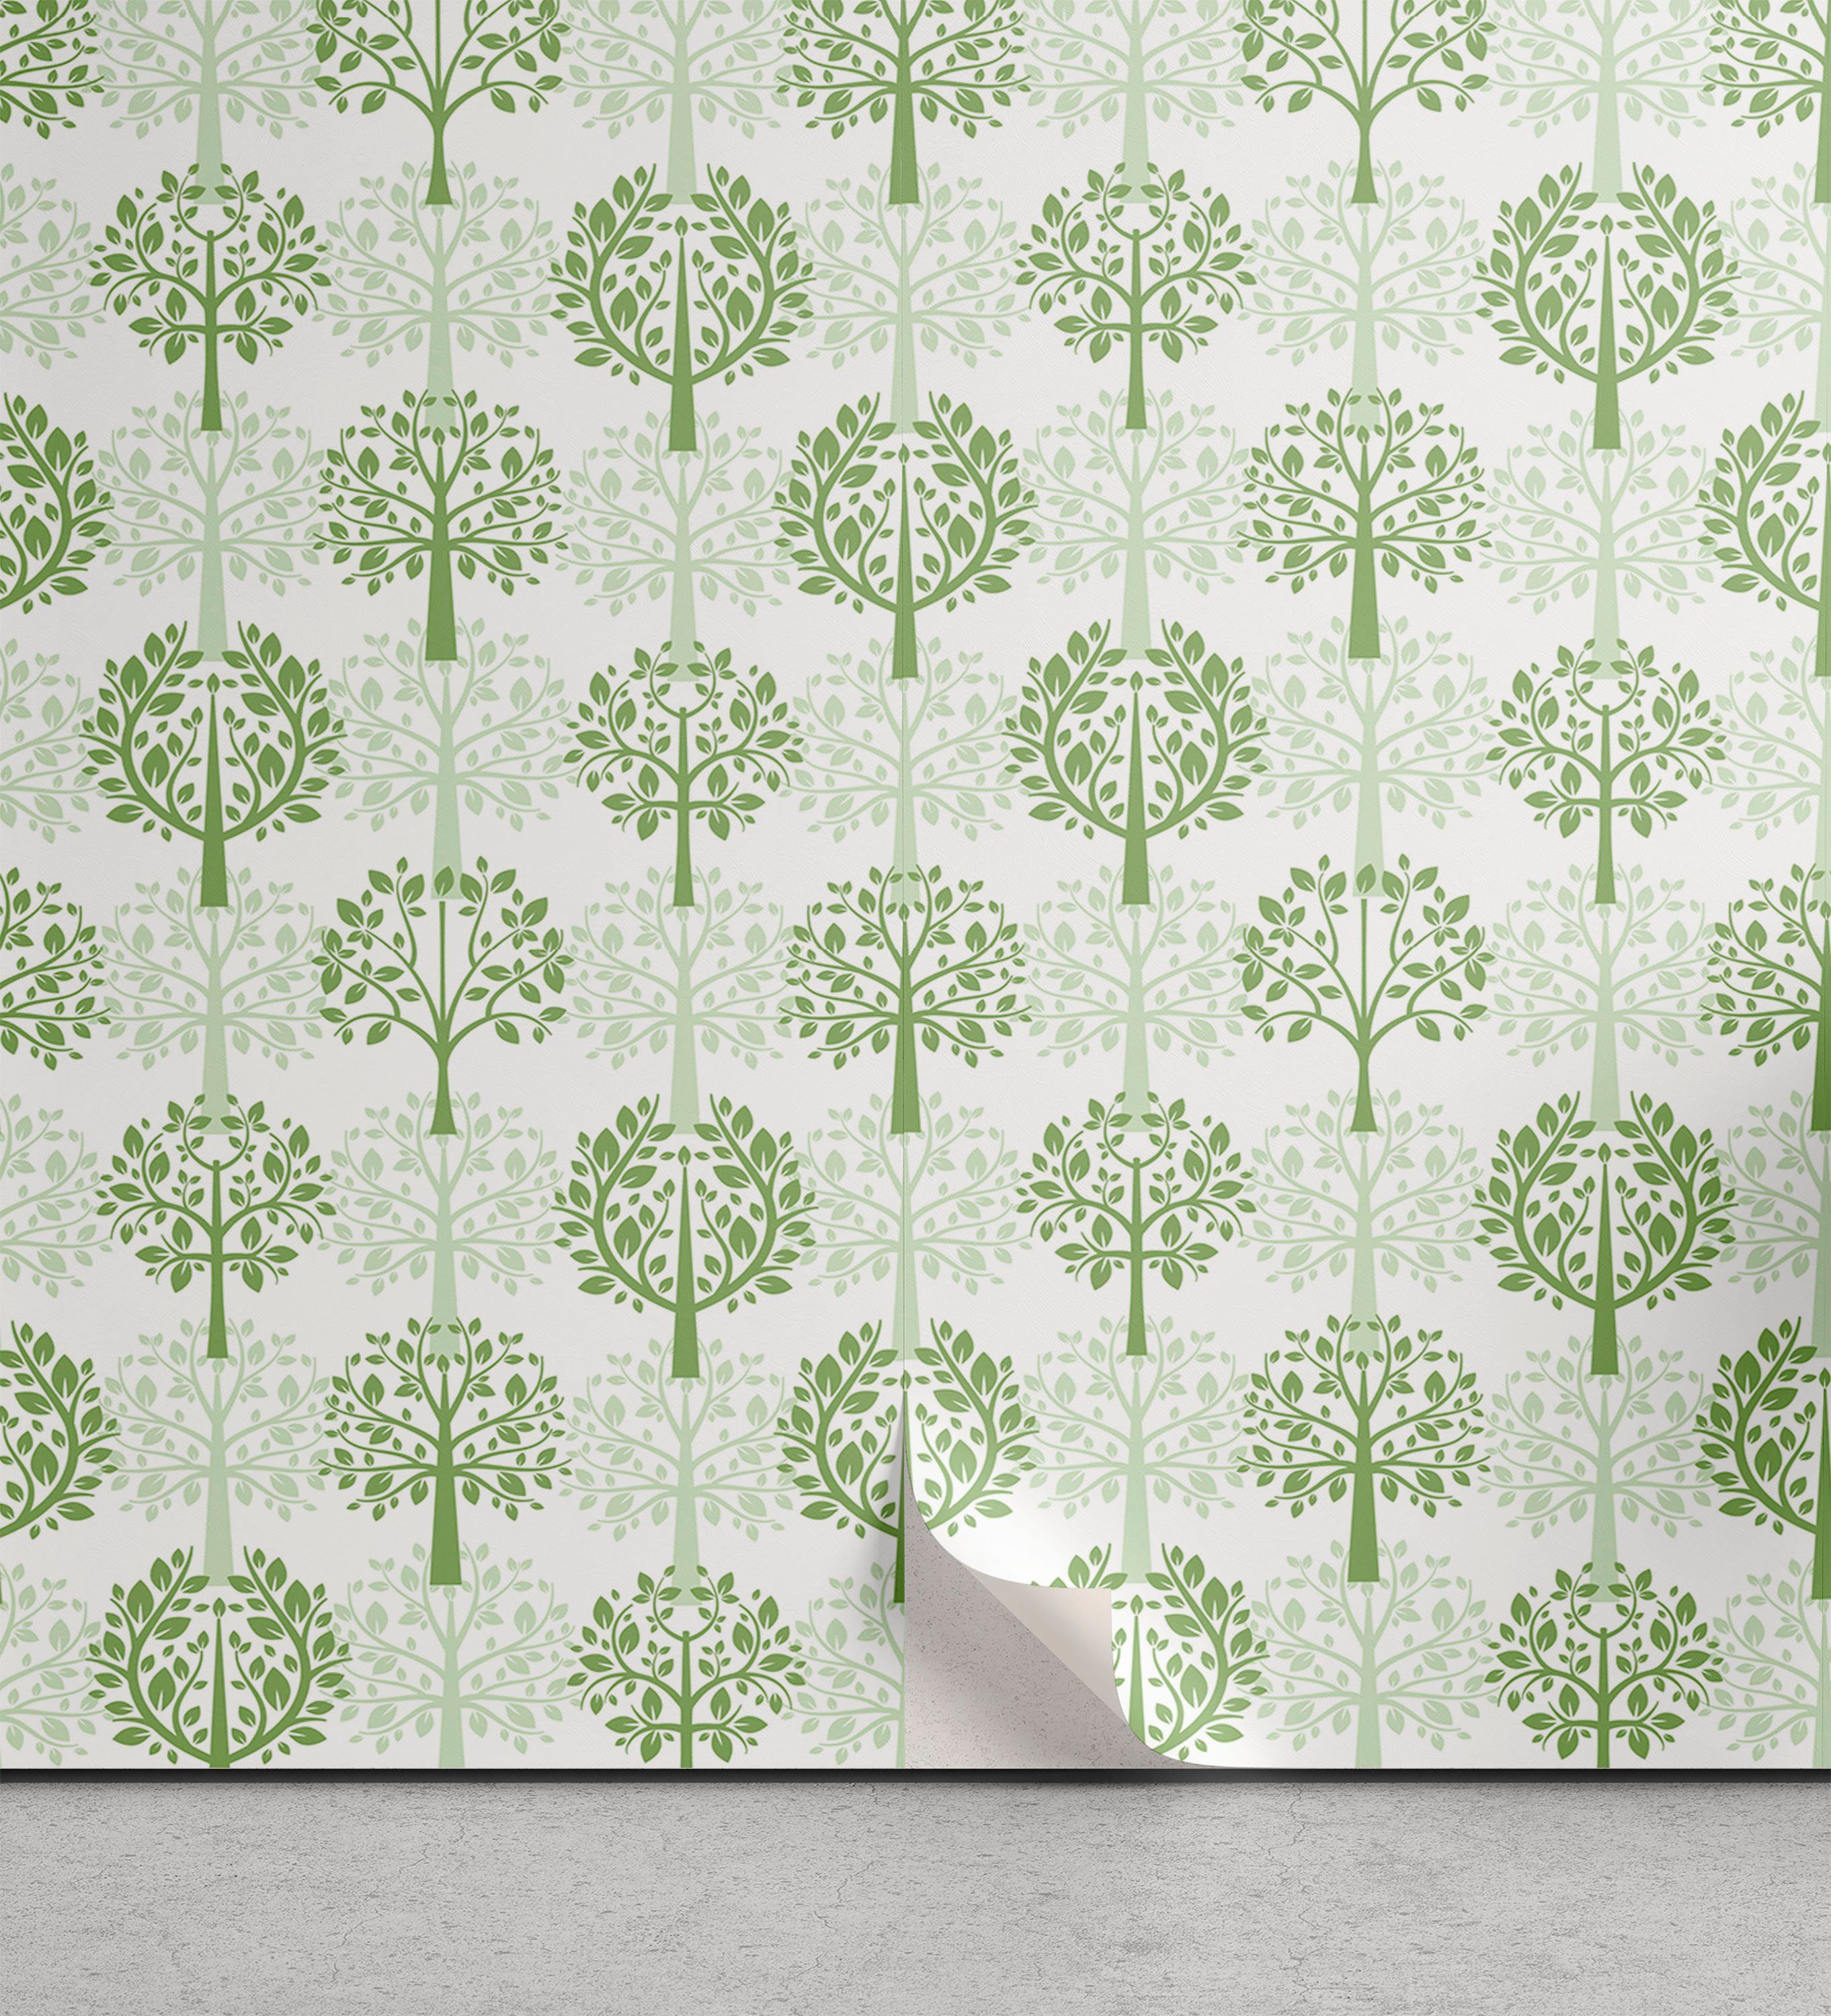 Abakuhaus Vinyltapete selbstklebendes Wohnzimmer Küchenakzent, Natur Monochrome Rhythmische Bäume | Vinyltapeten